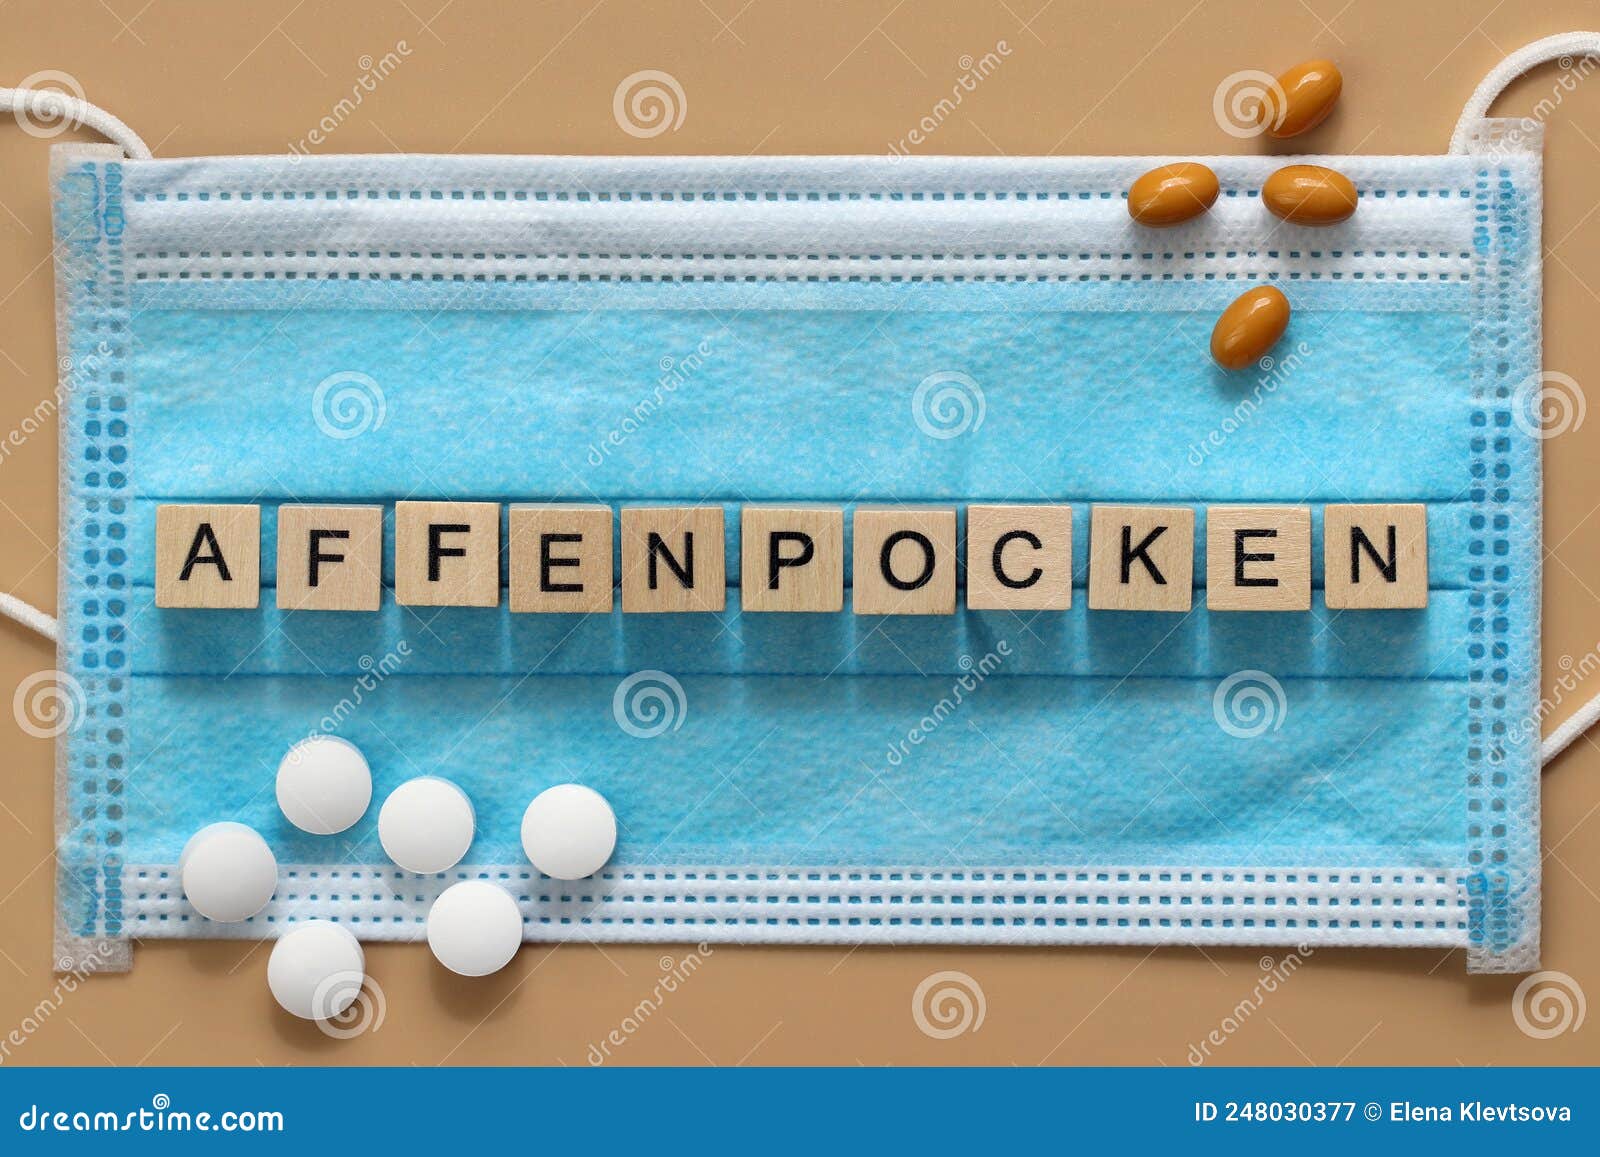 affenpocken is the name of the monkeypox virus in german.